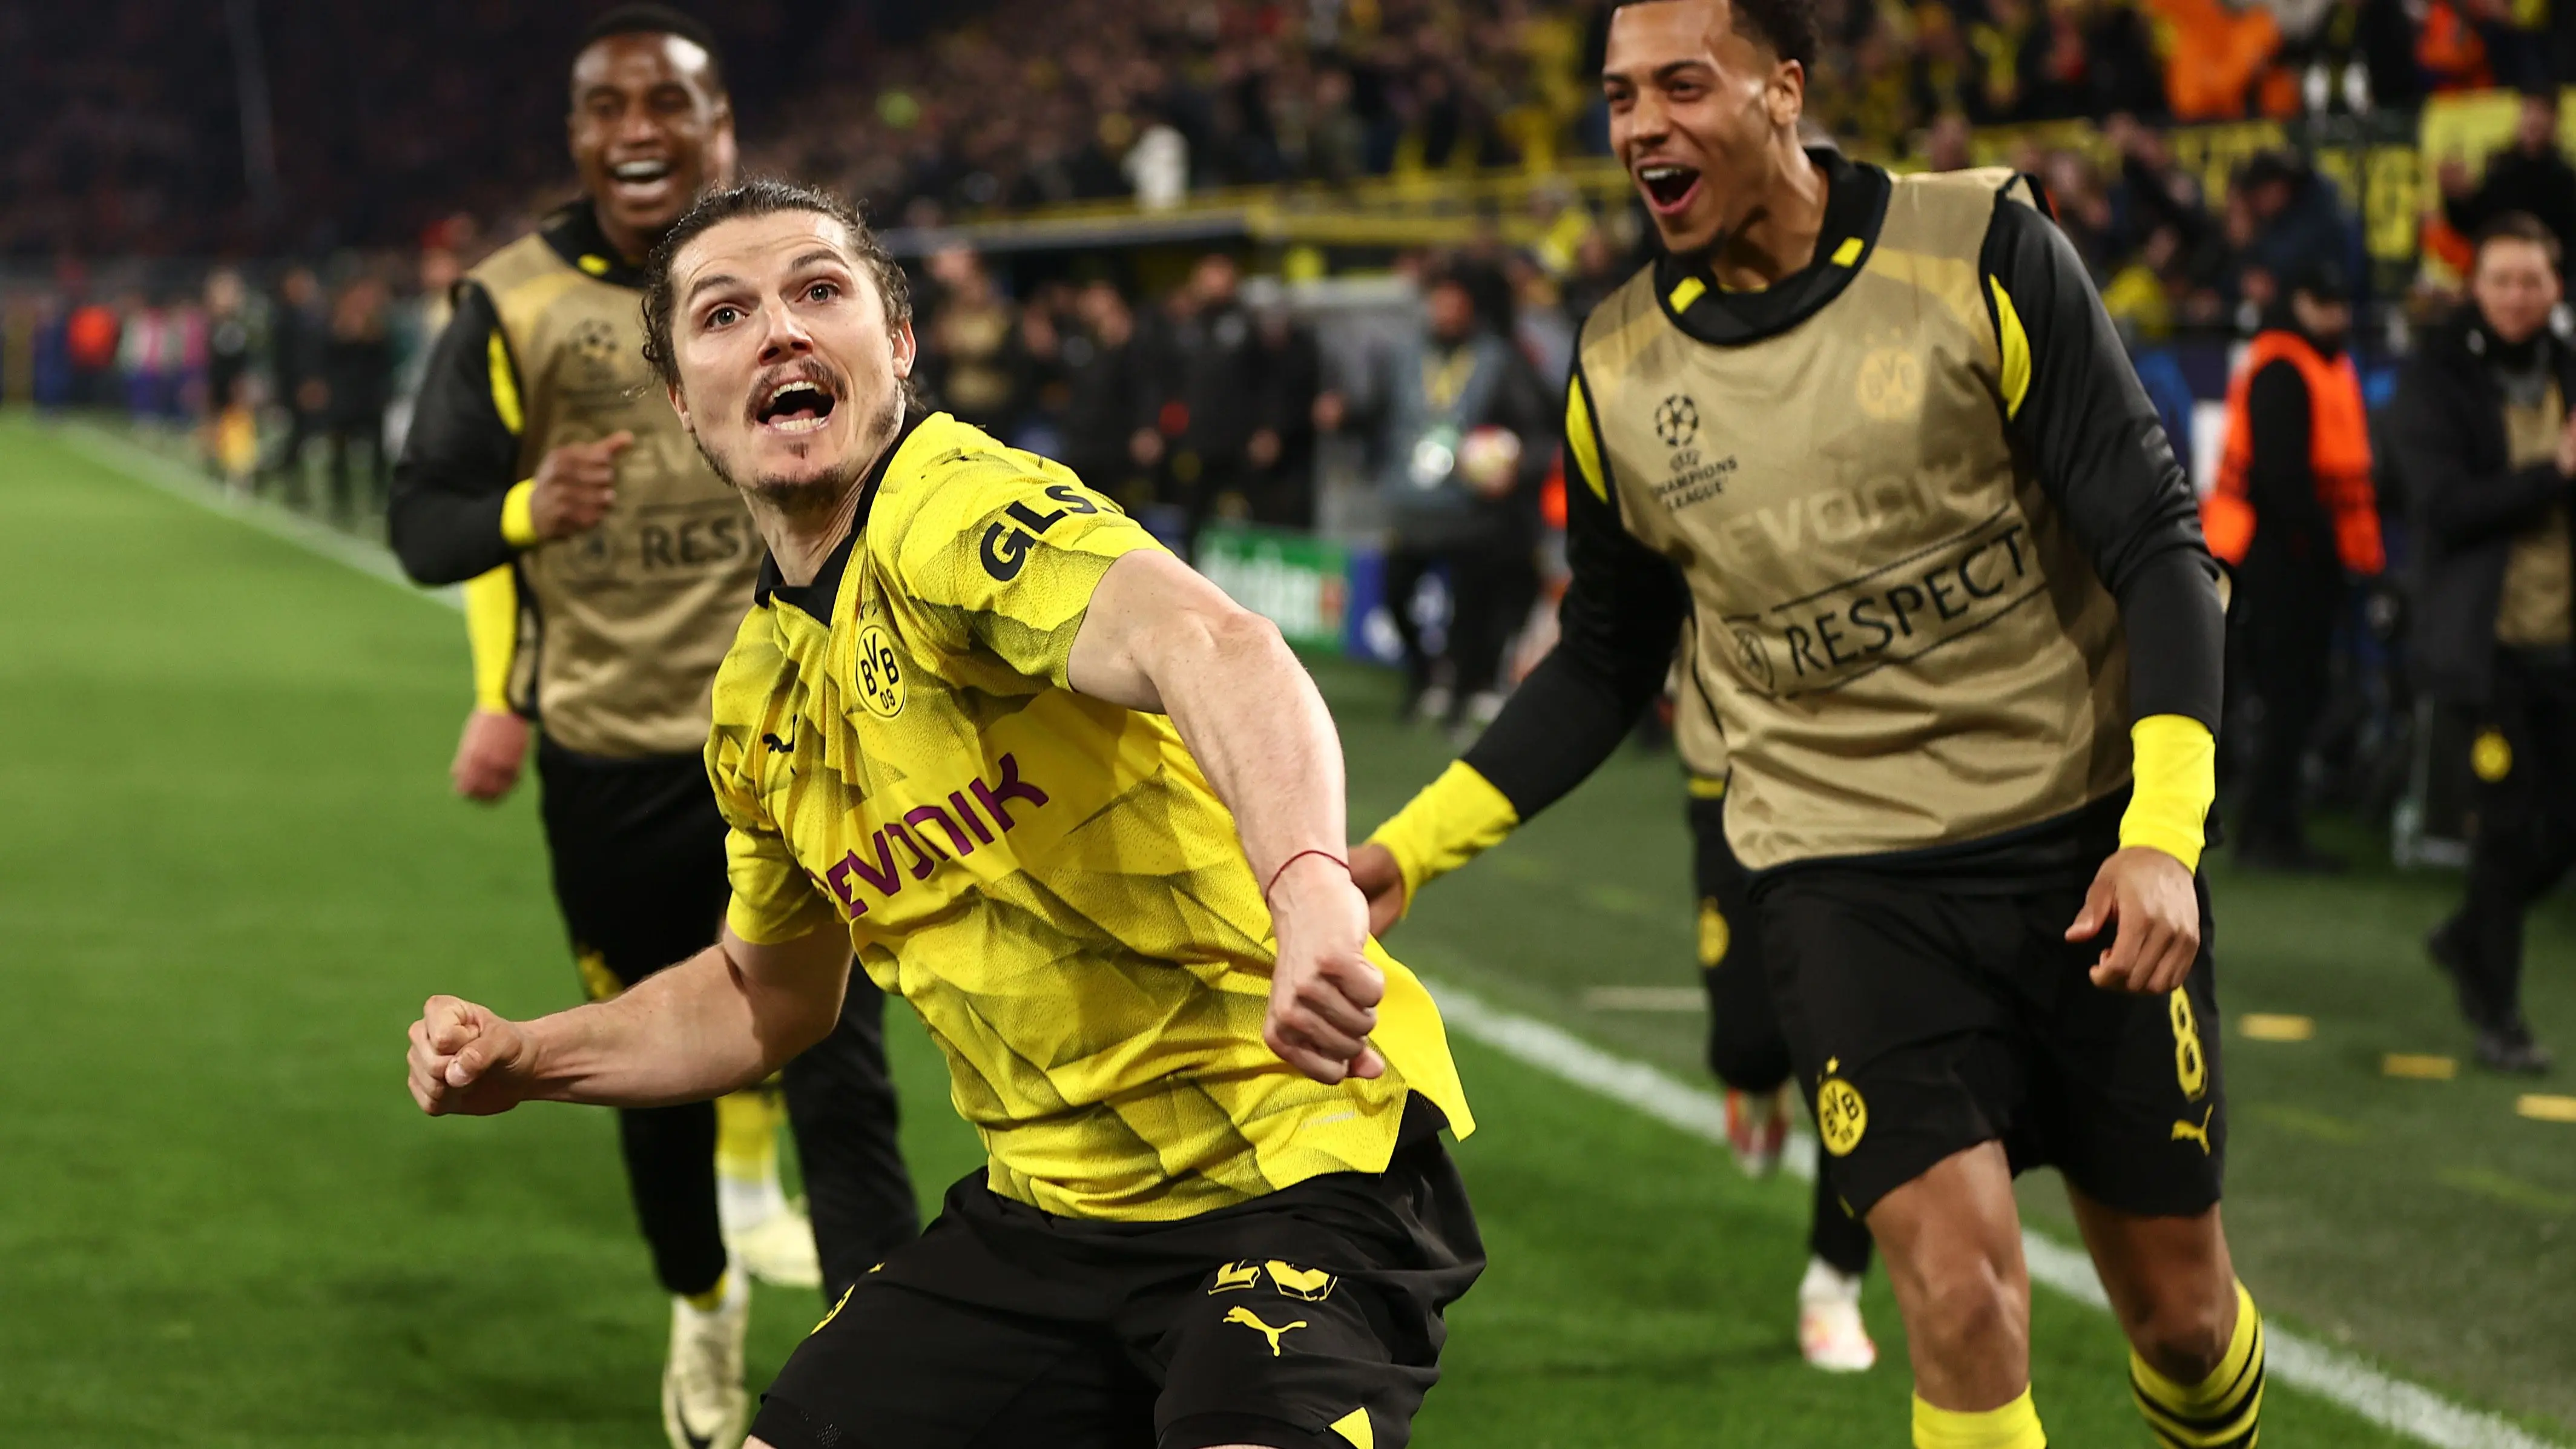 Dortmund Reach Semis After Thrilling 4-2 Win Over Atlético Madrid